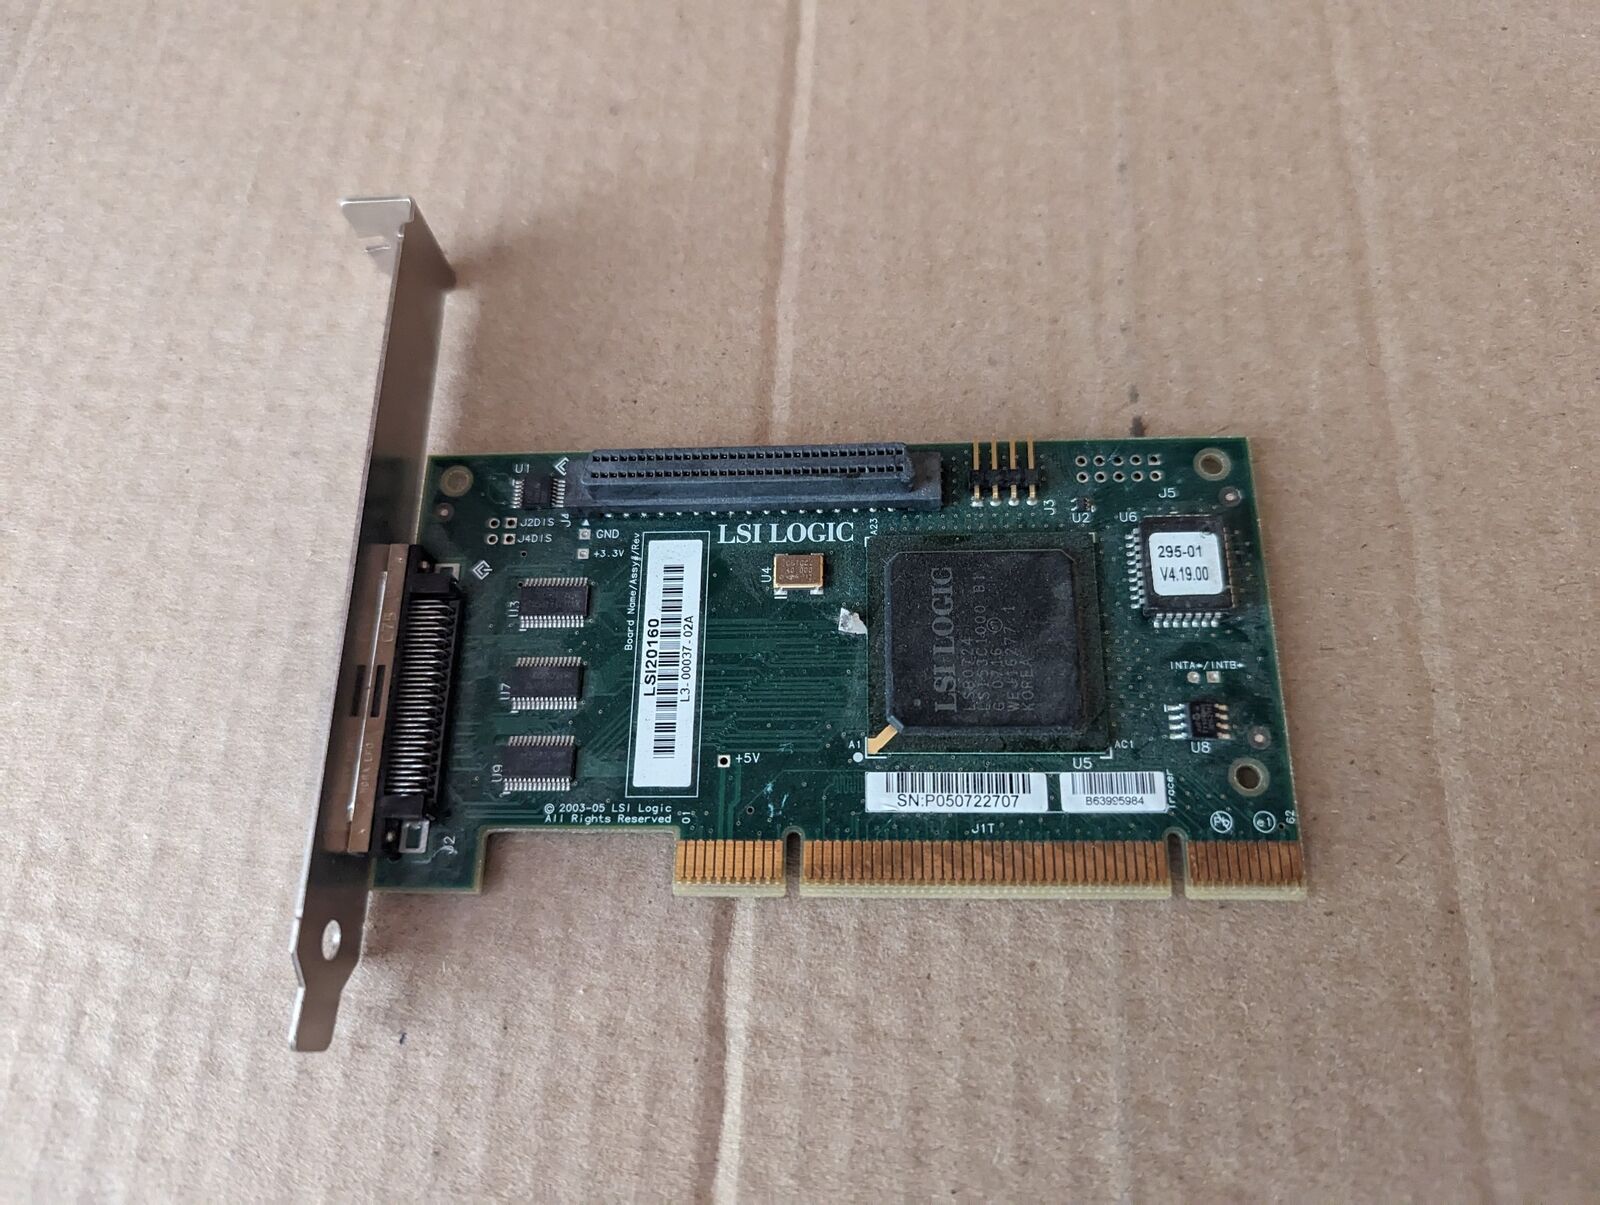 LSI LOGIC LSI20160 PCI SCSI RAID CONTROLLER CARD L3-00037-02A V5-5(10)